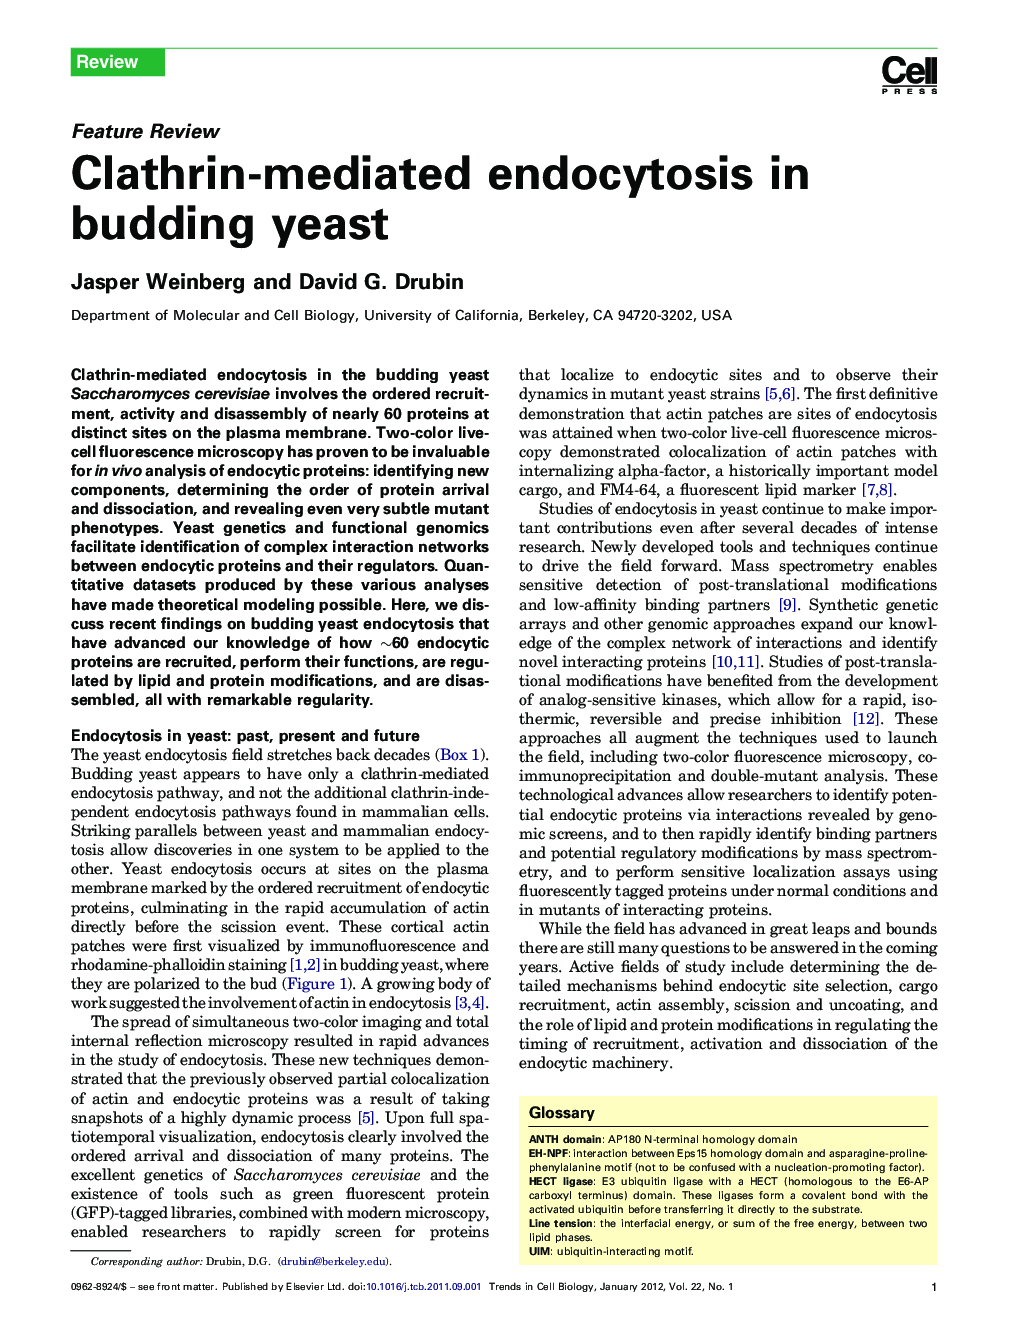 Clathrin-mediated endocytosis in budding yeast